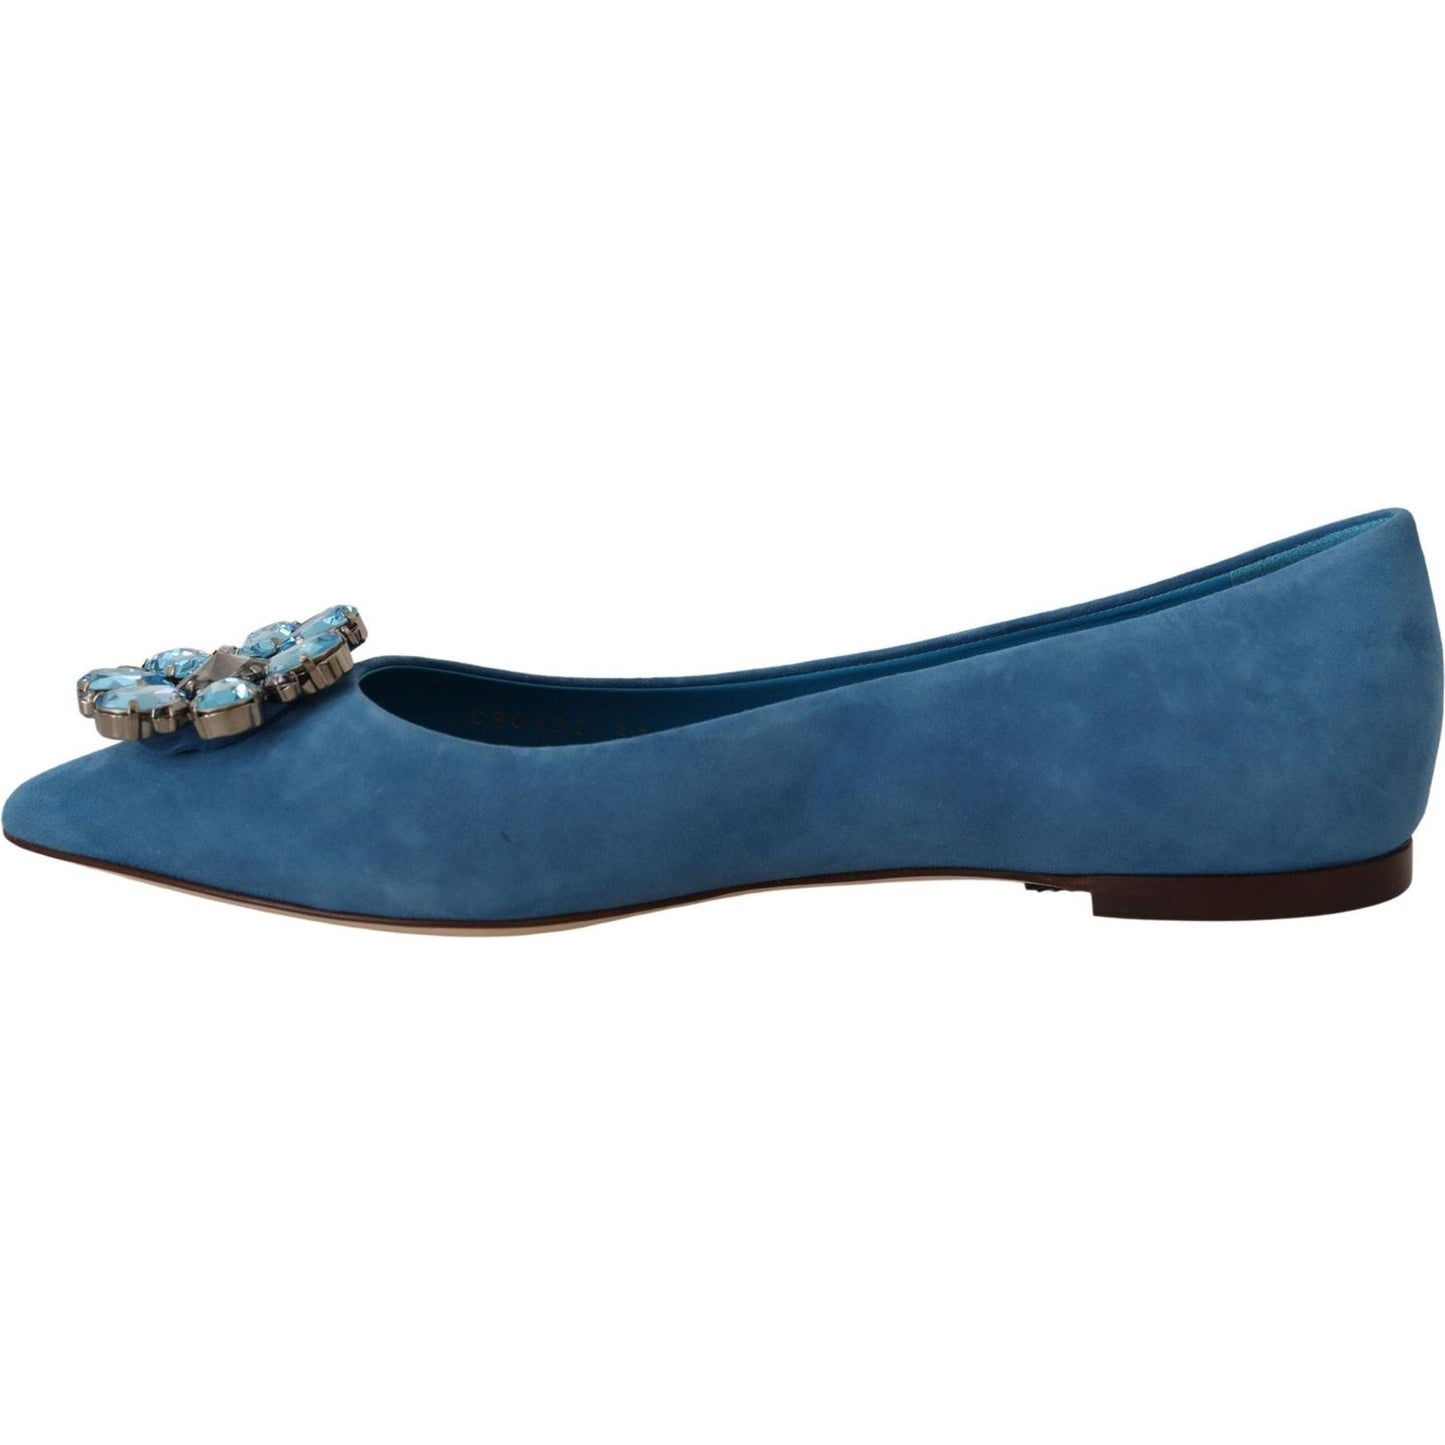 Dolce & Gabbana Elegant Crystal-Embellished Suede Flats blue-suede-crystals-loafers-flats-shoes IMG_5786-scaled-3b809c7d-6ba.jpg